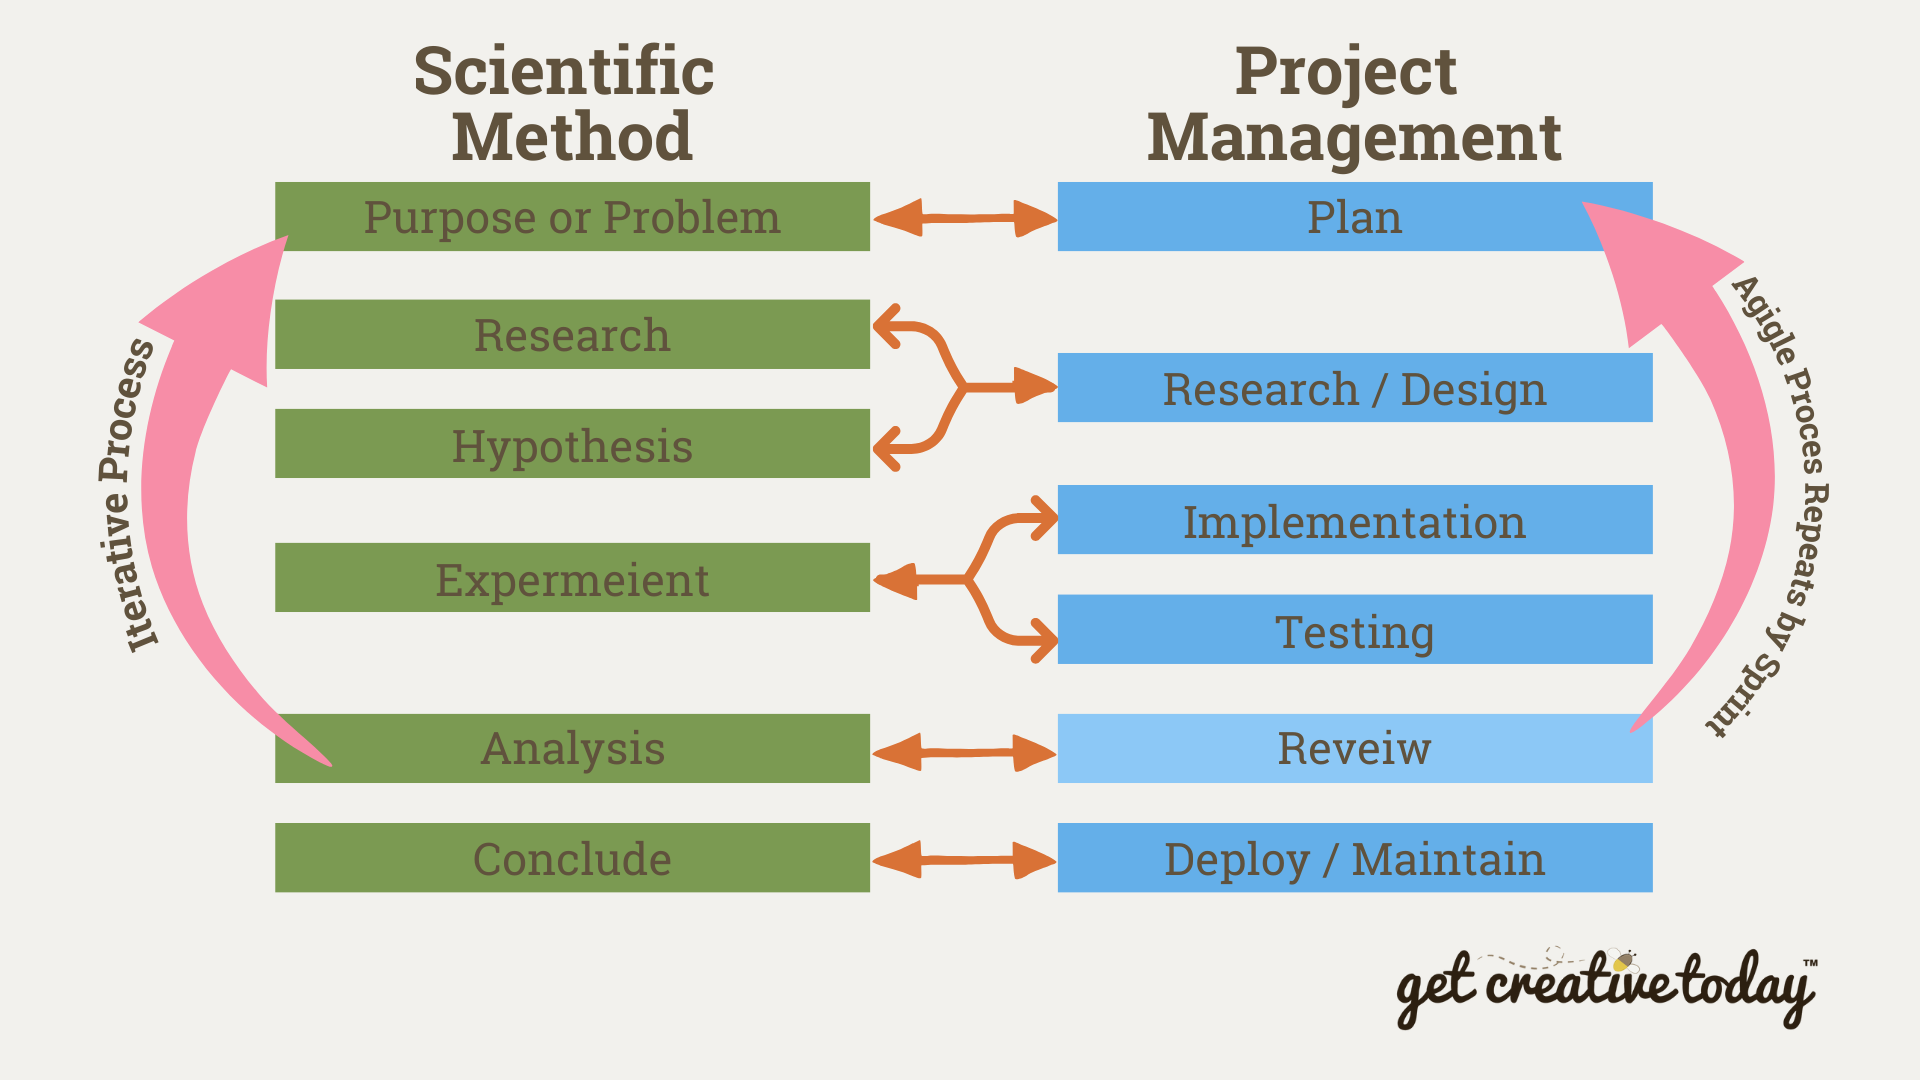 Scientific Method vs Project Management